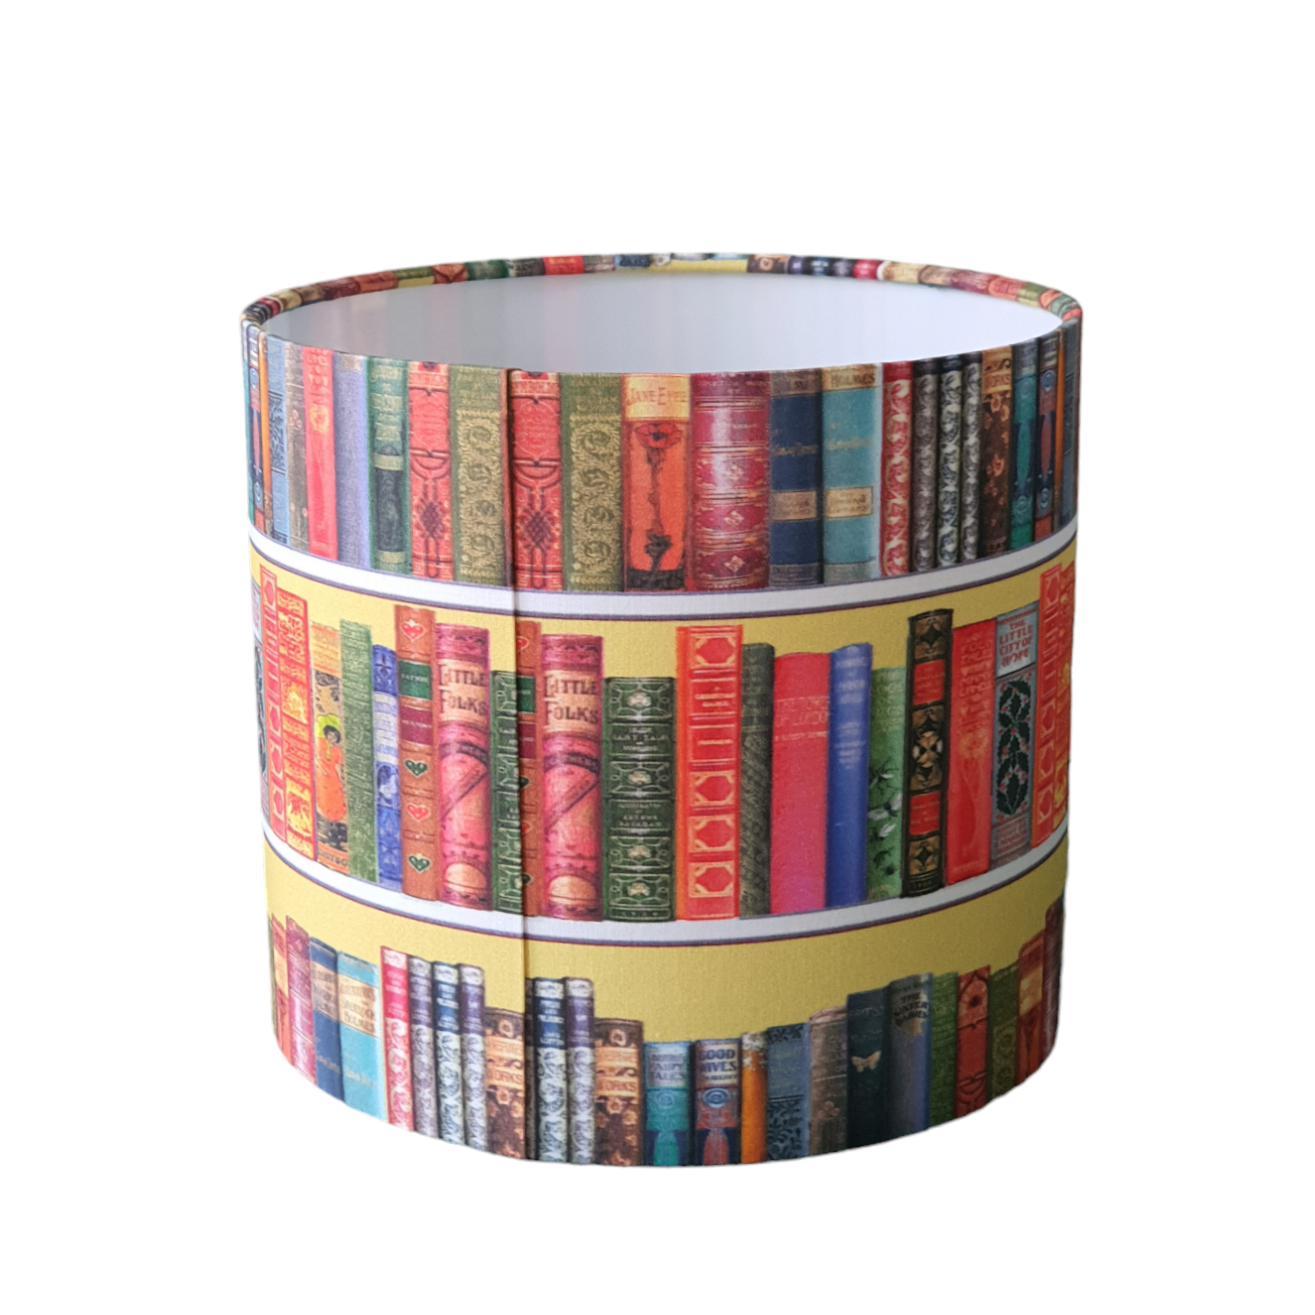 Handmade 20cm Drum Lampshade - Classic Books Fabric - Book Lovers Gift